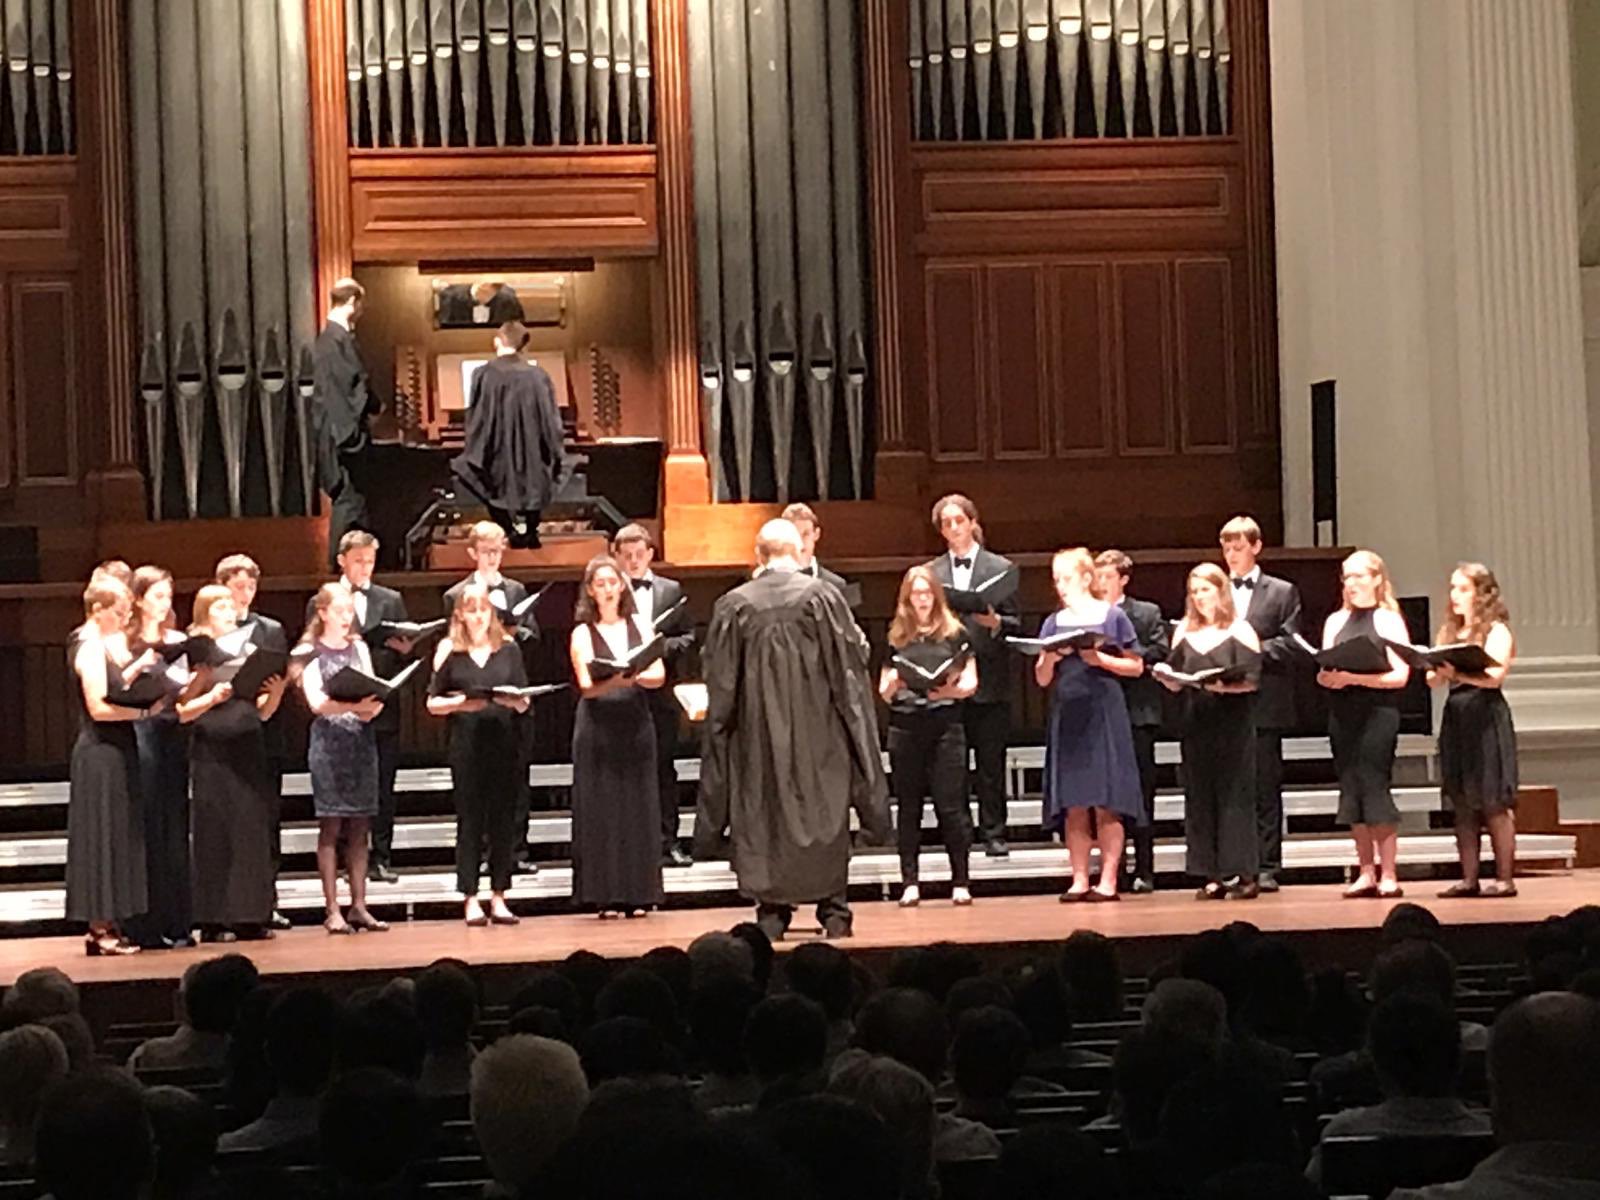 Choir singing in concert hall